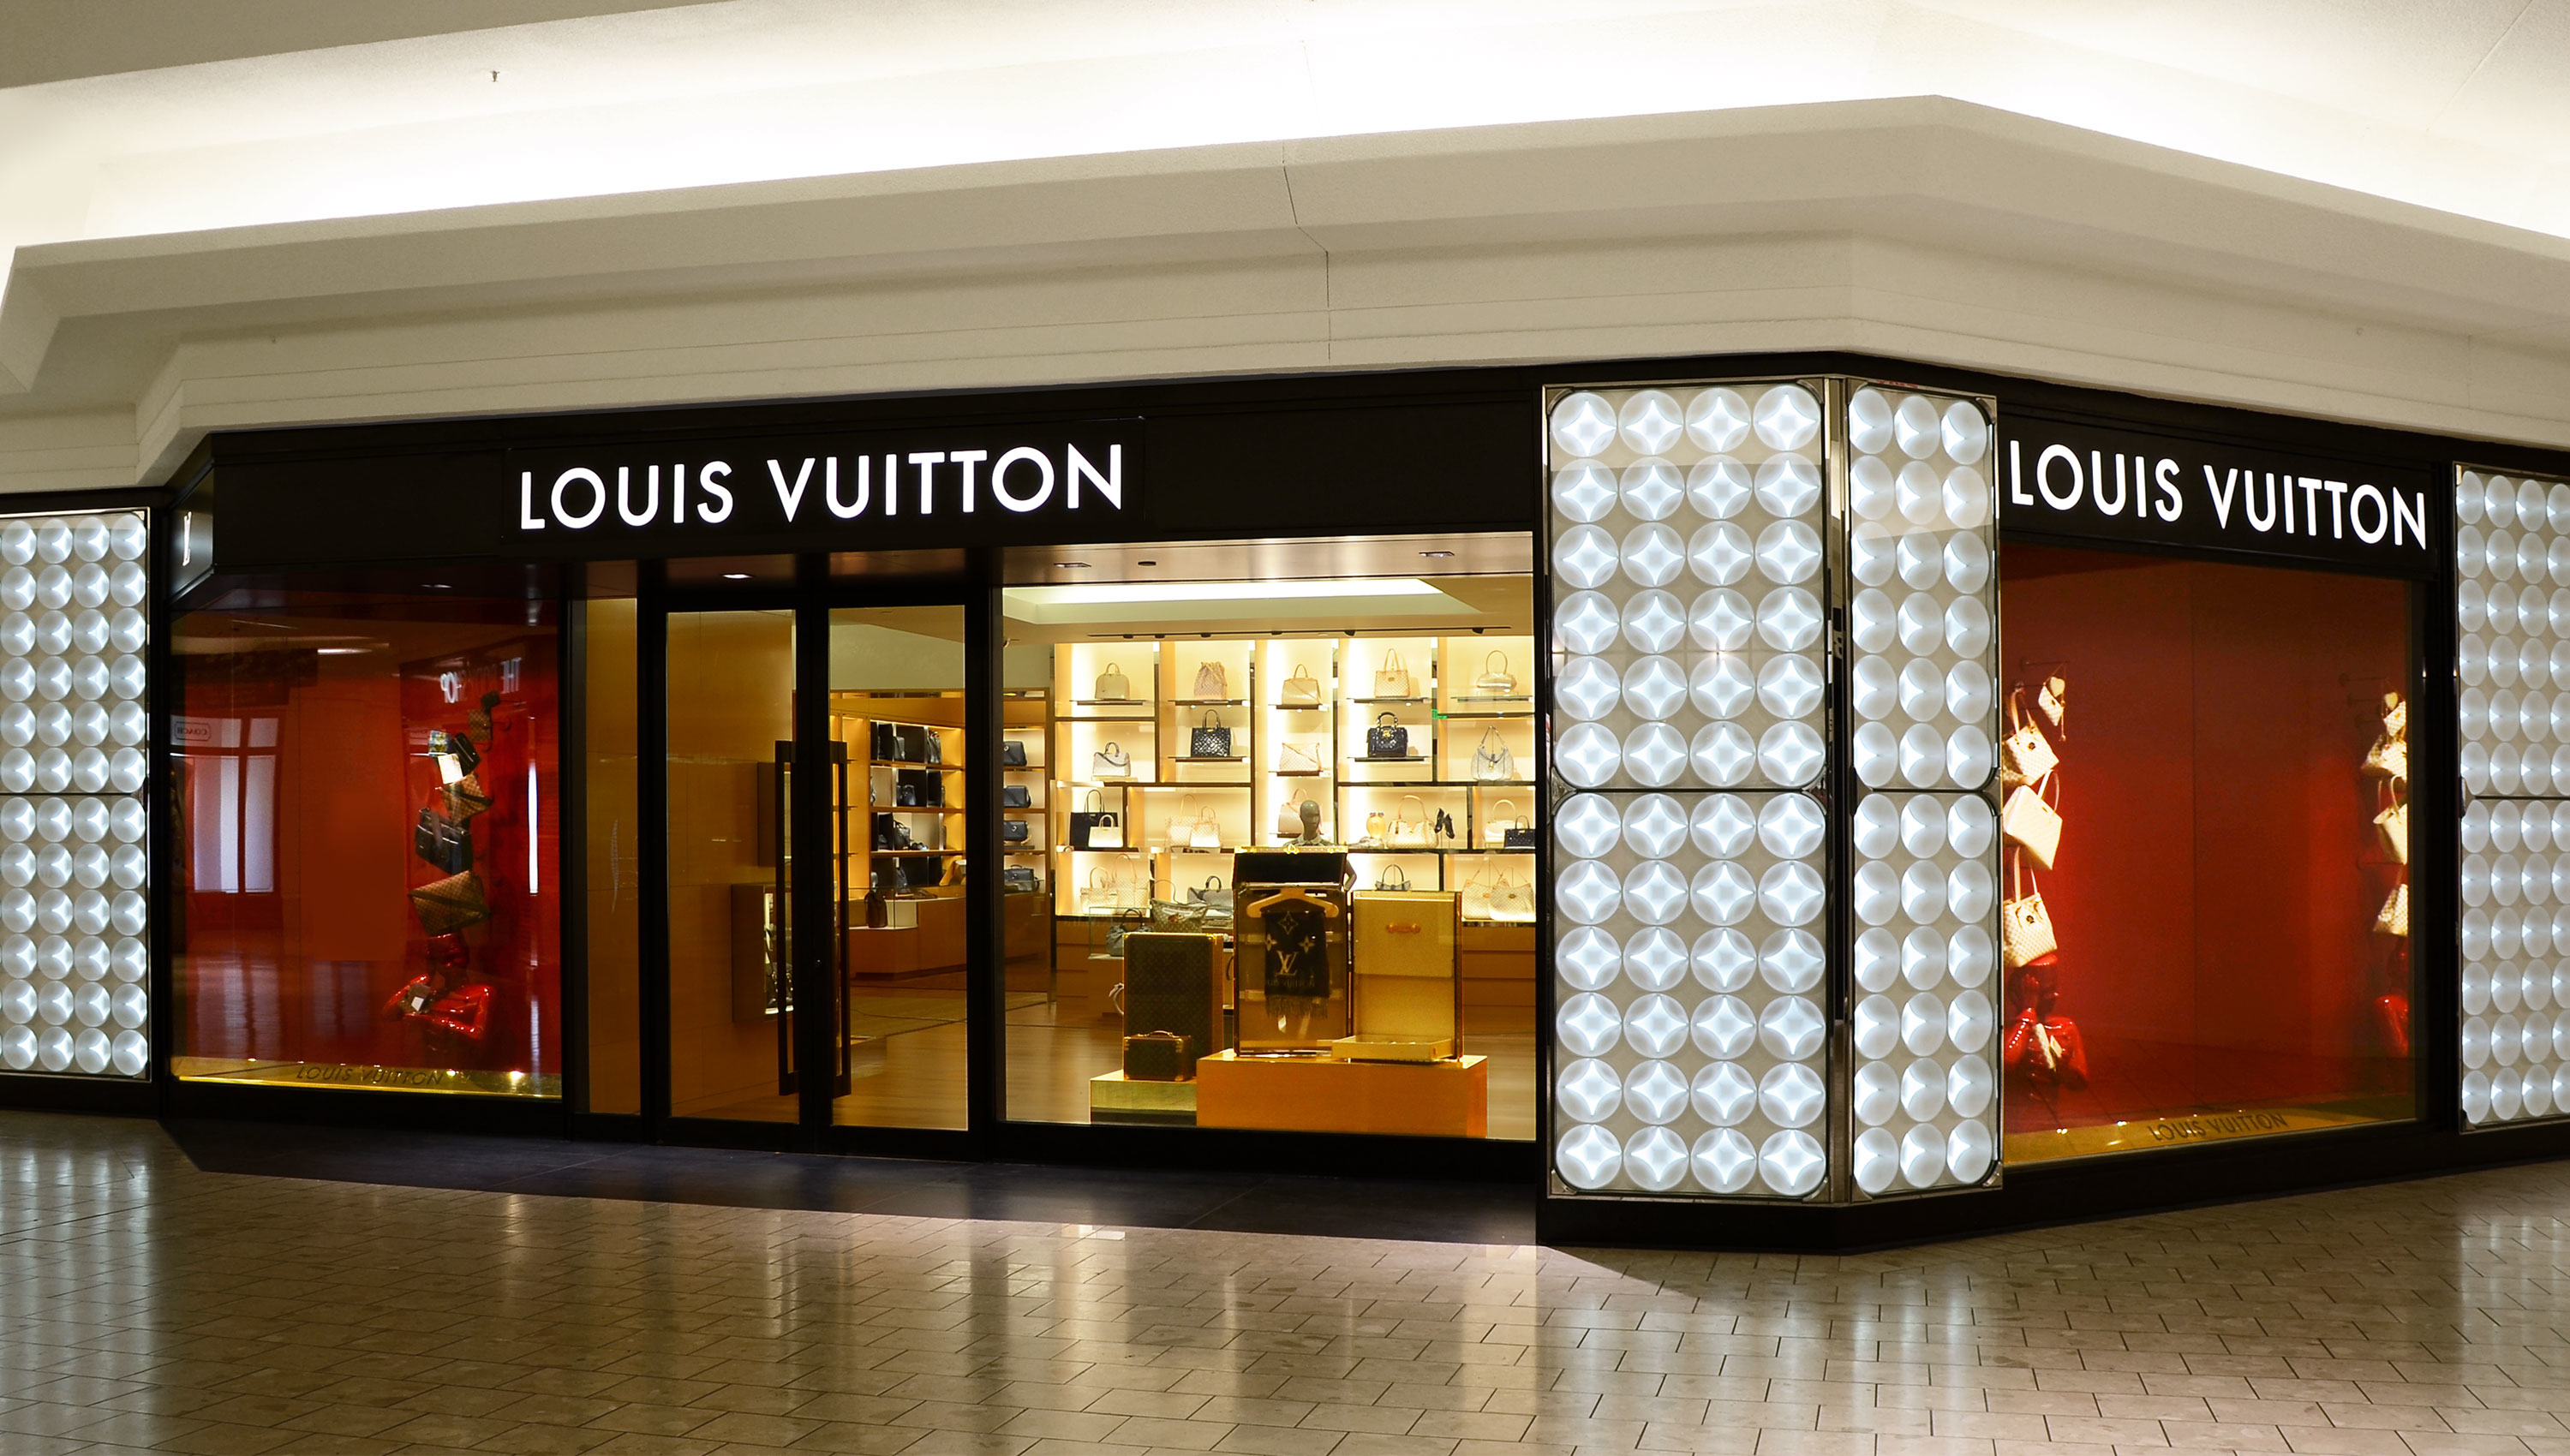 Louis Vuitton Short Hills Coupons near me in Short Hills, NJ 07078 | 8coupons